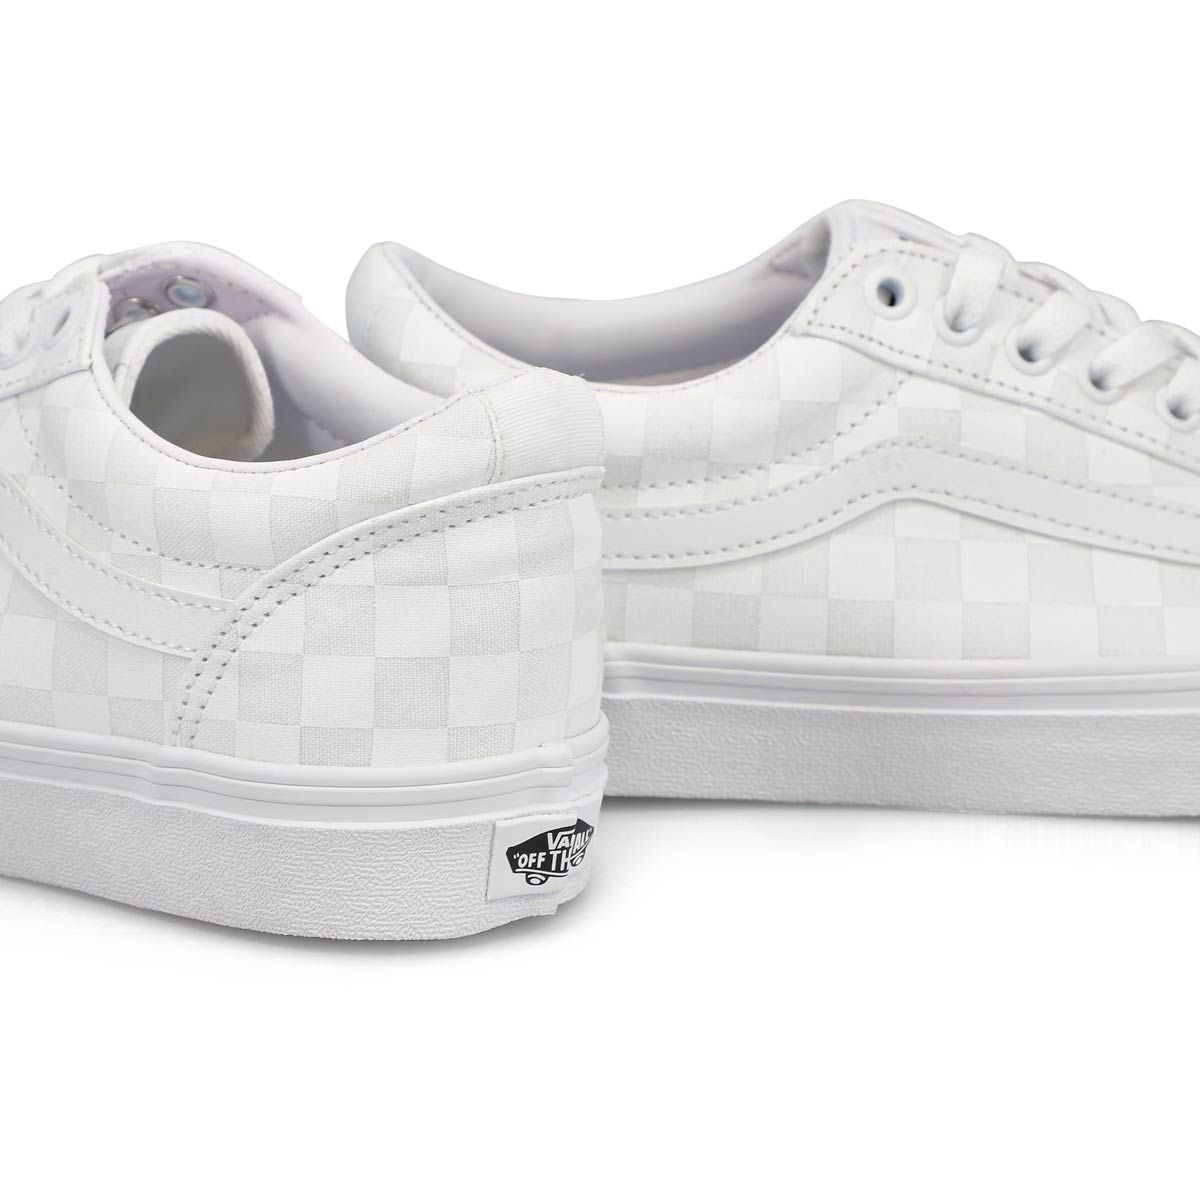 Men's Ward Sneaker - Checkered White/White